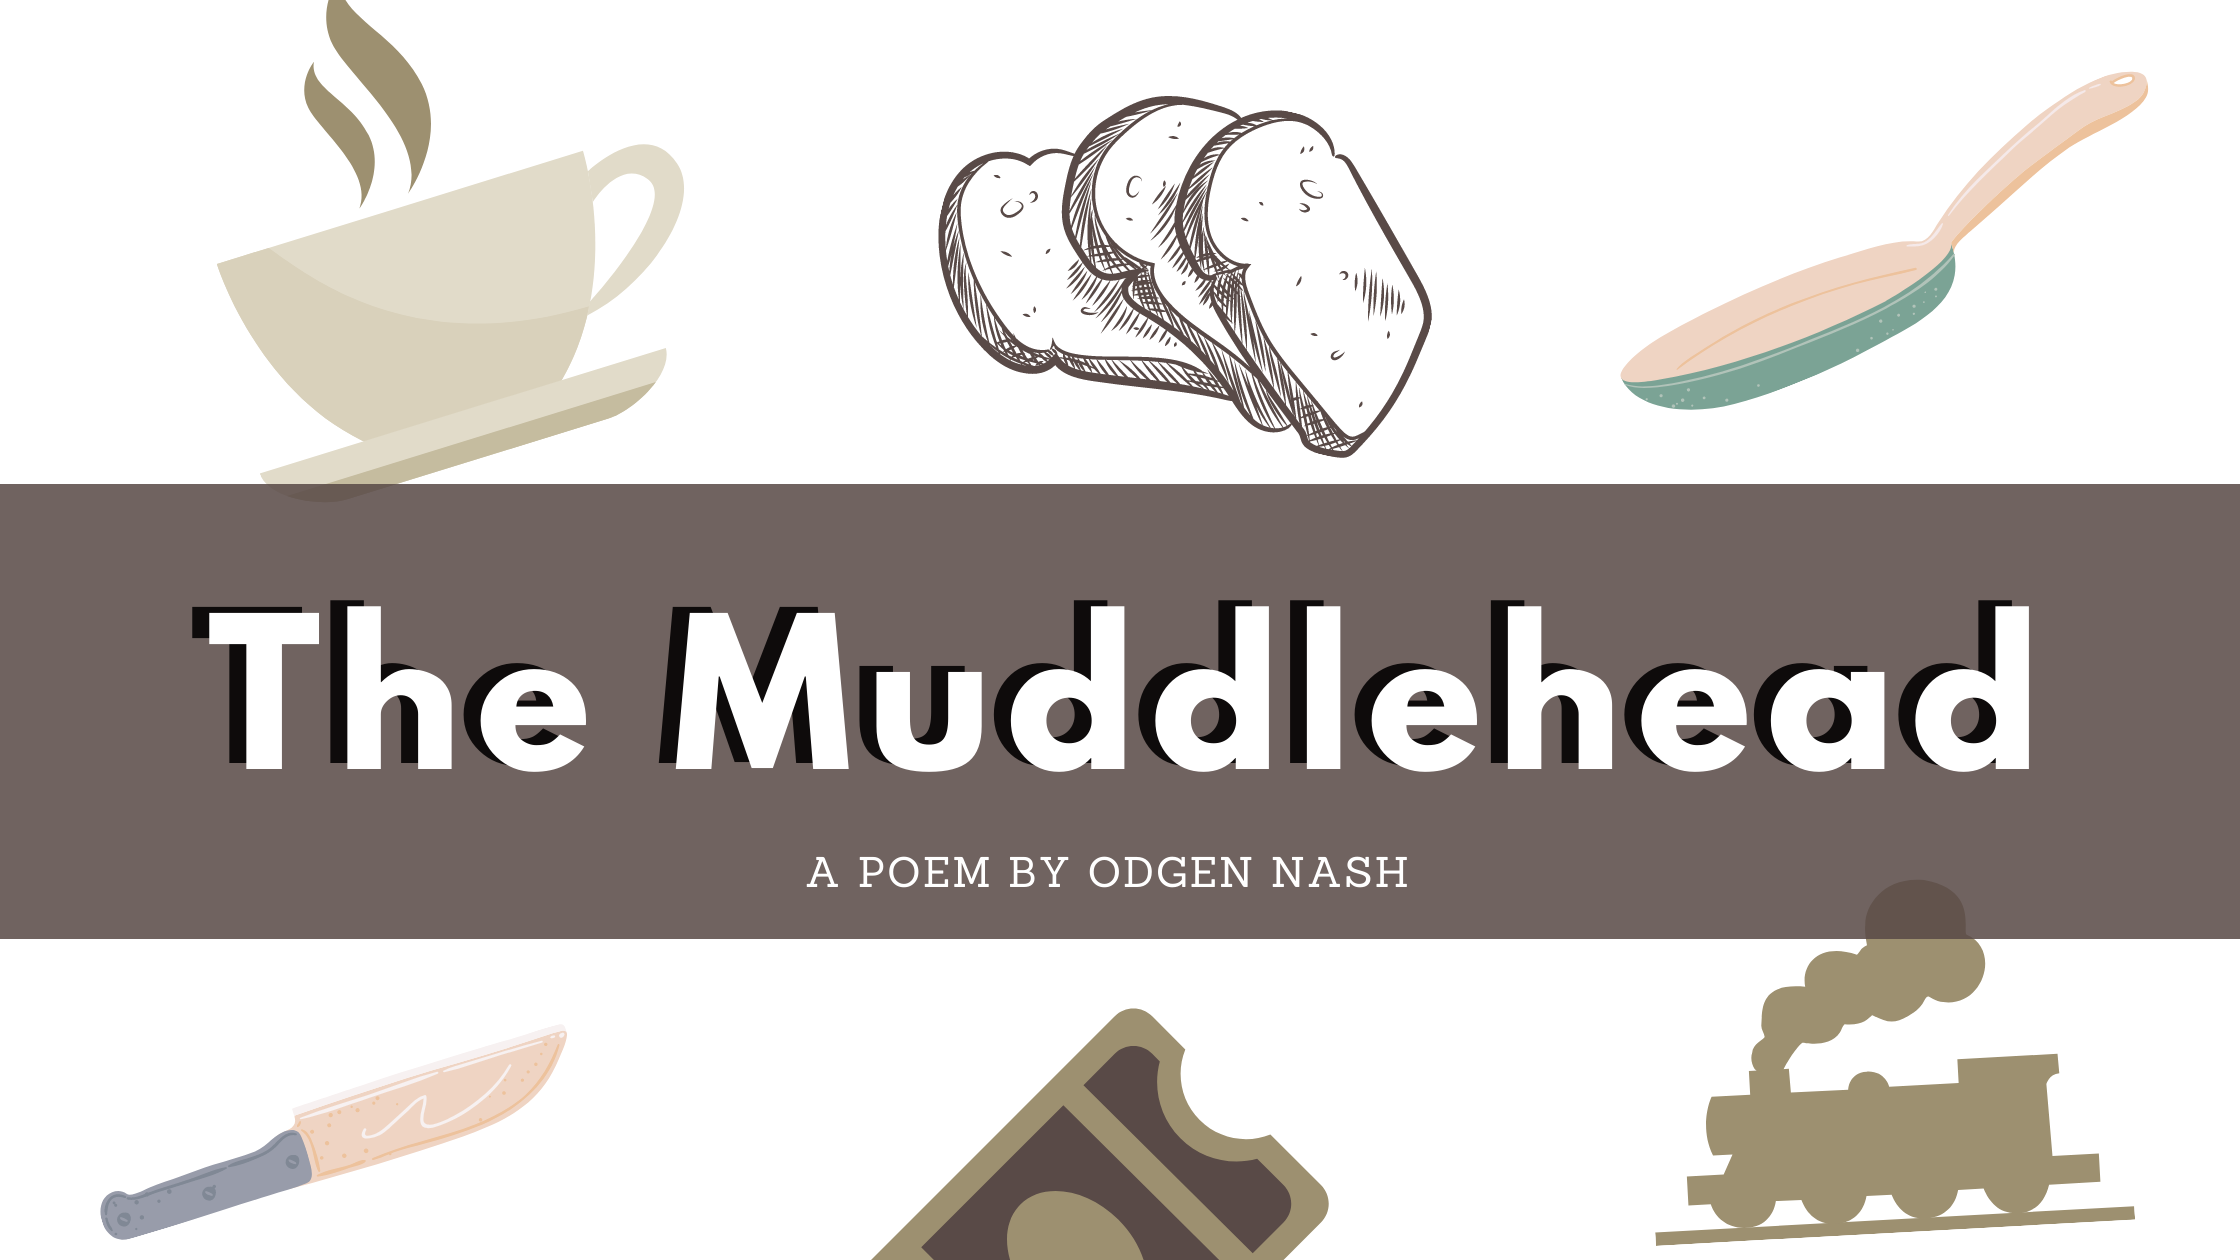 The Muddlehead by Ogden Nash